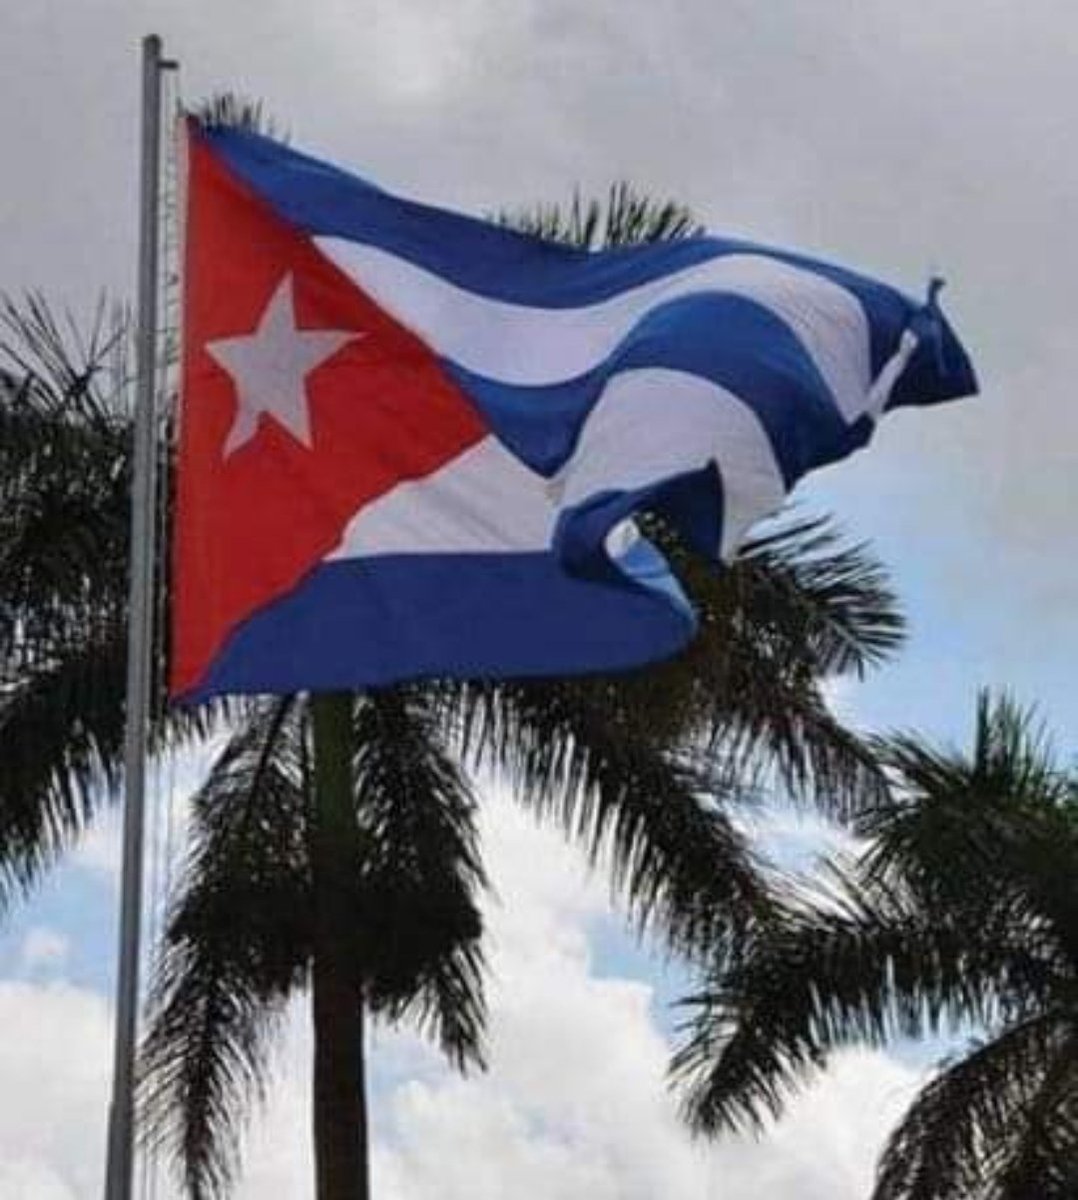 #tuluzesmipasion
#CubaViveyVence
Yennier